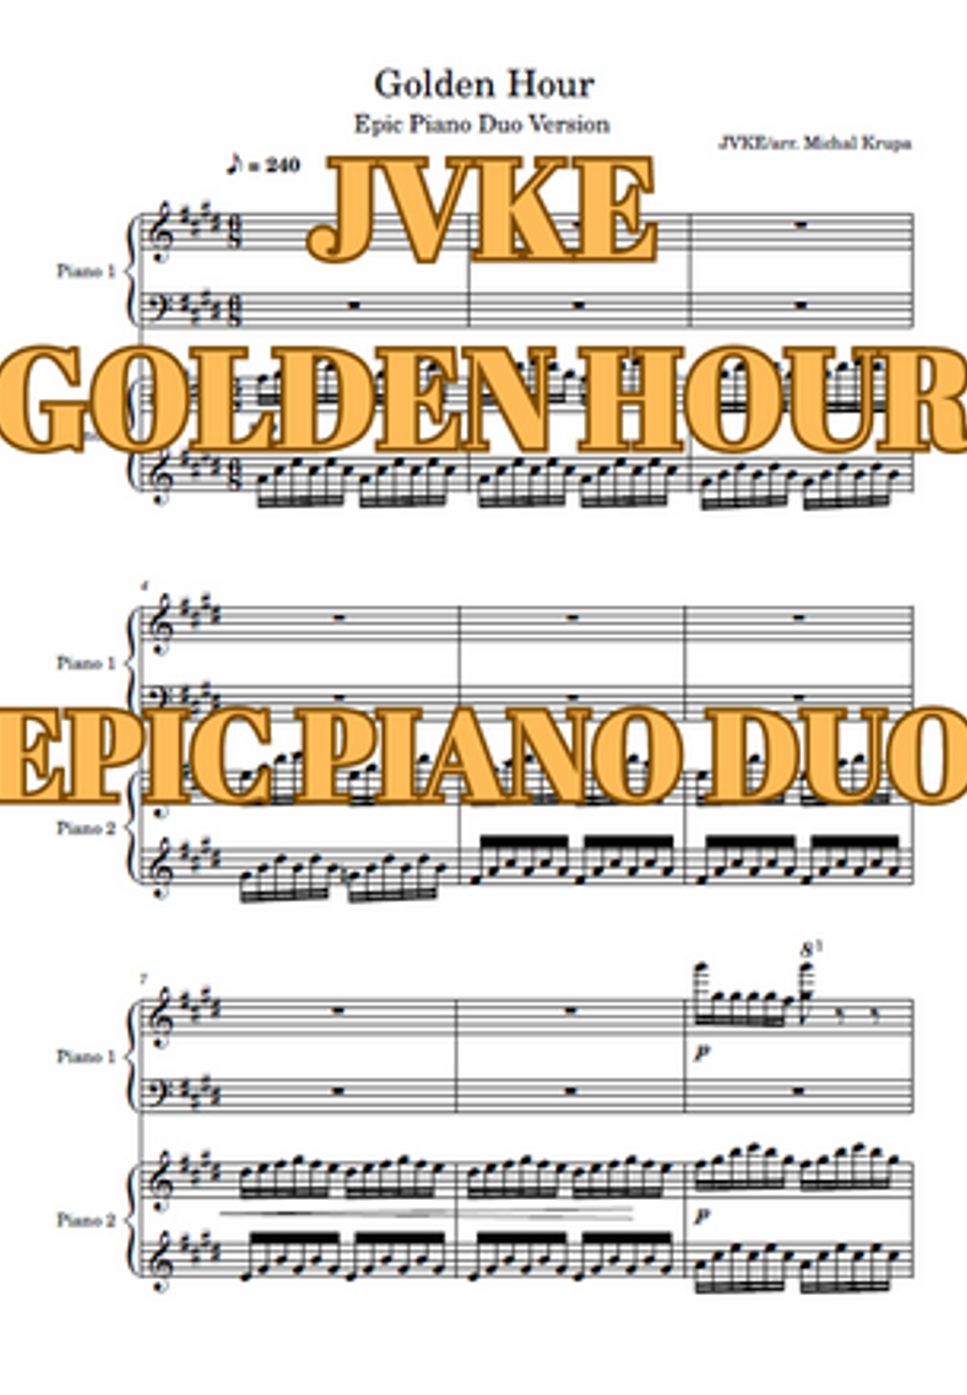 JVKE - Golden hour (EPIC PIANO DUO Version) by Michal Krupa